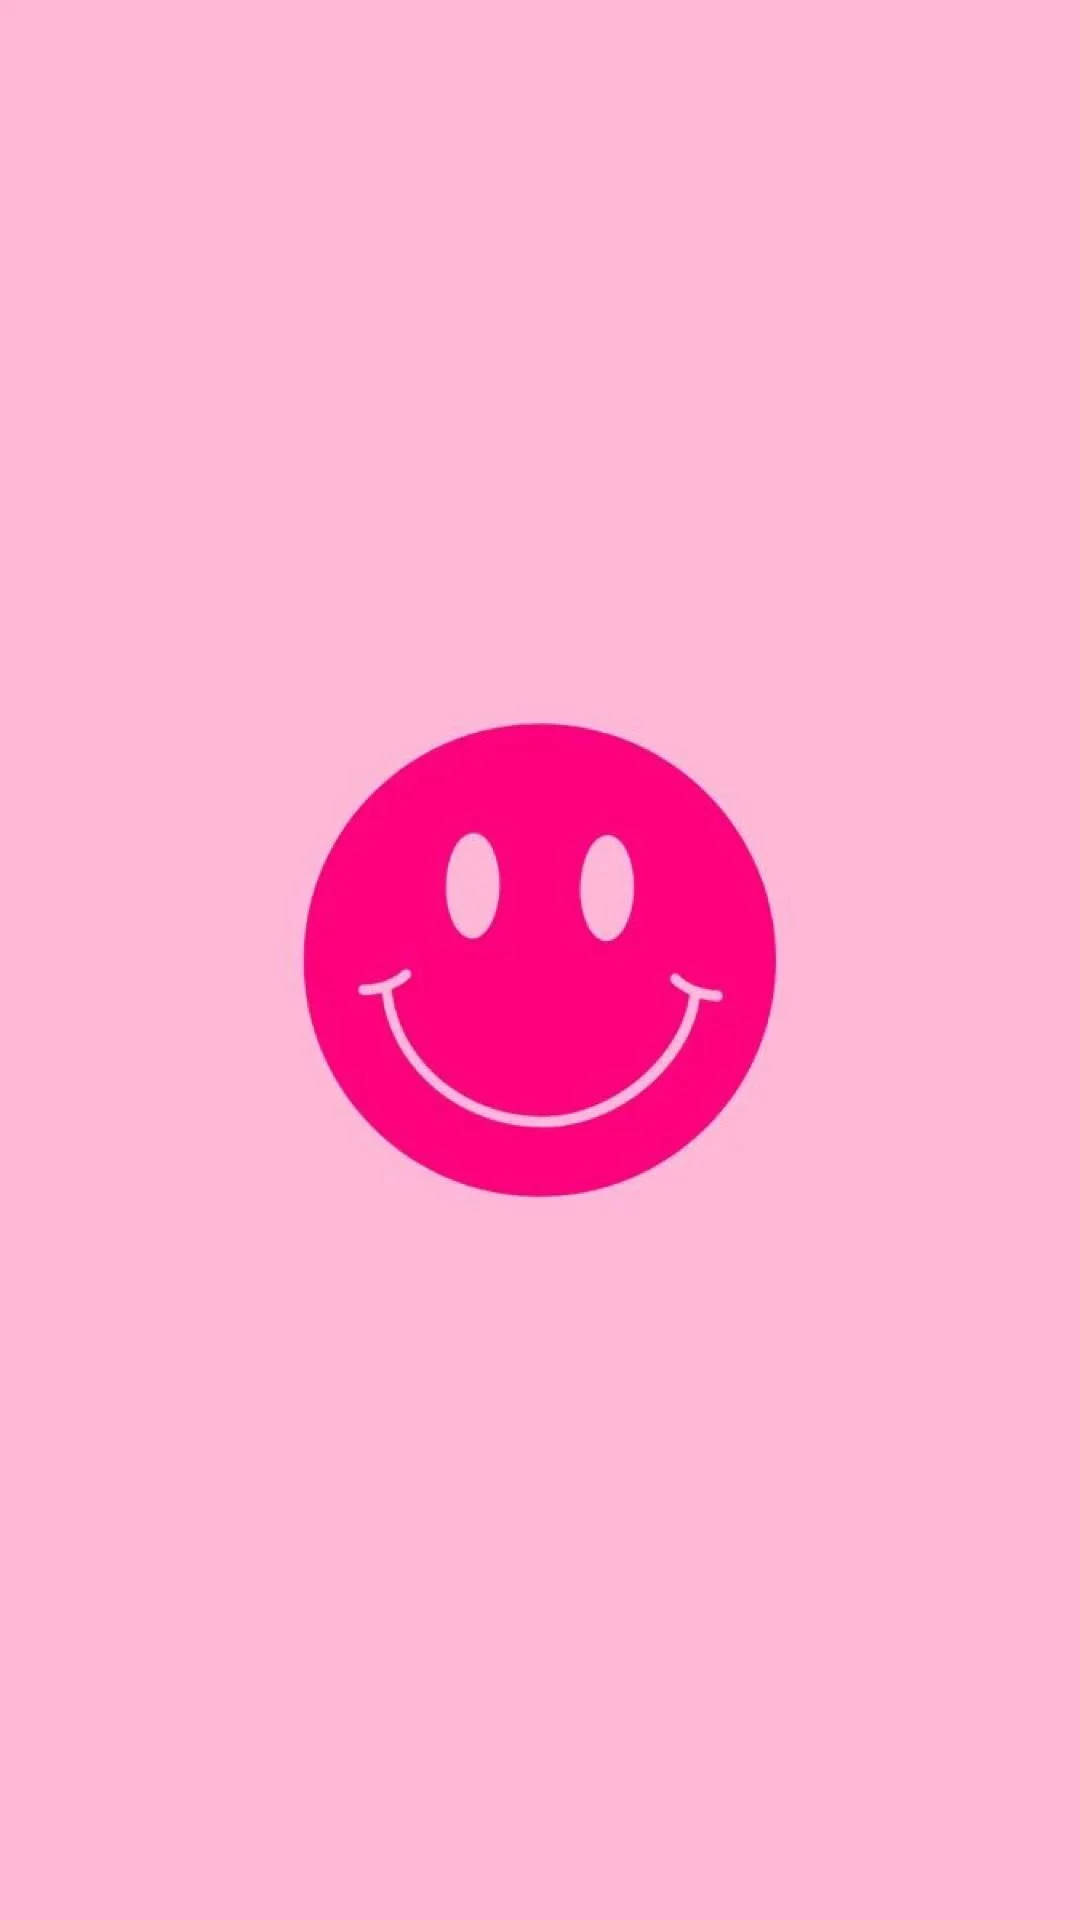 Download Minimalist Preppy Pink Smiley Face Wallpaper 